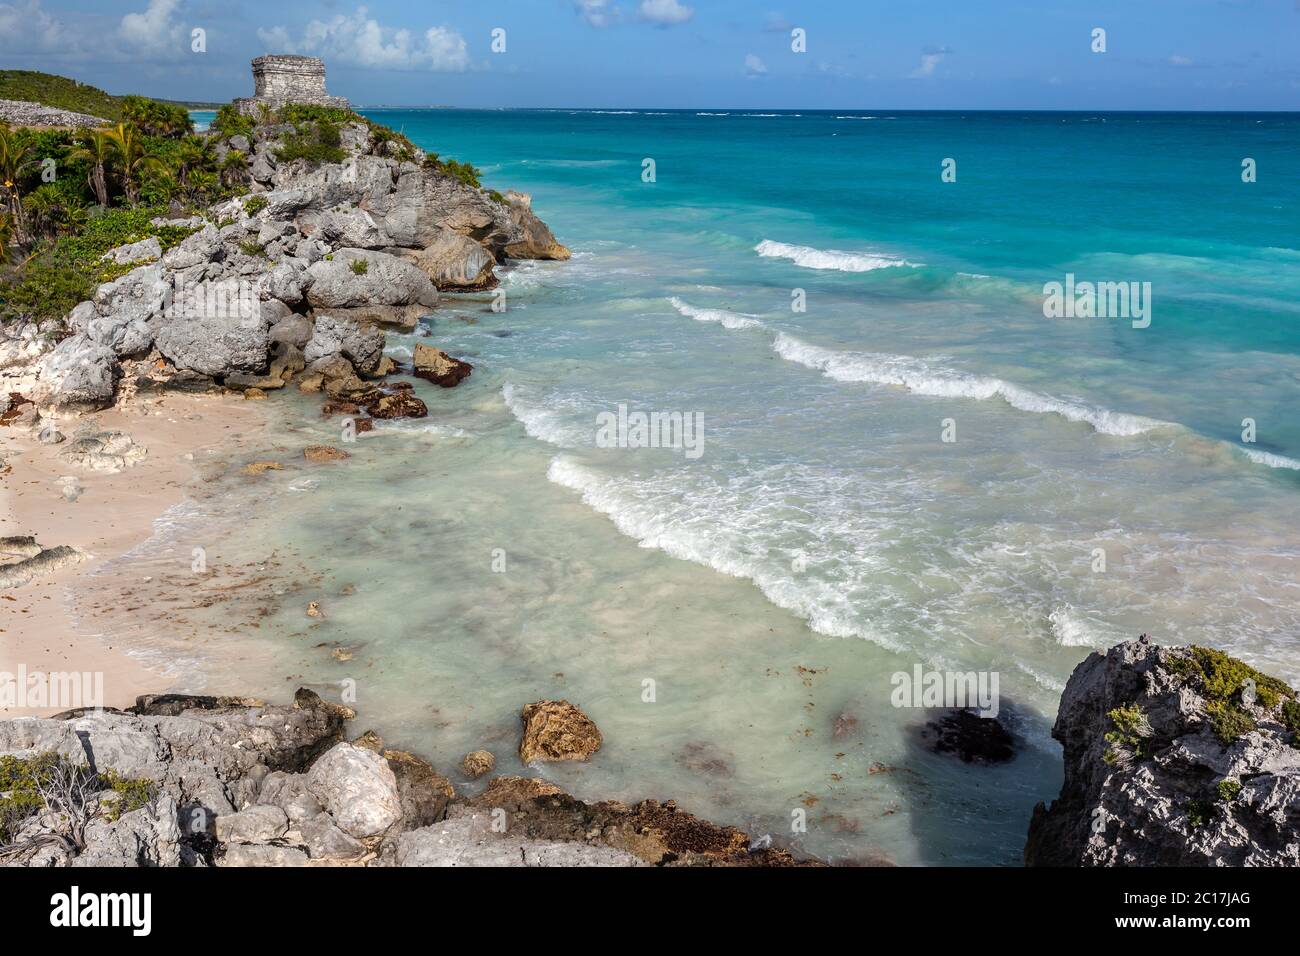 Mayan ruins over Caribbean Sea Stock Photo